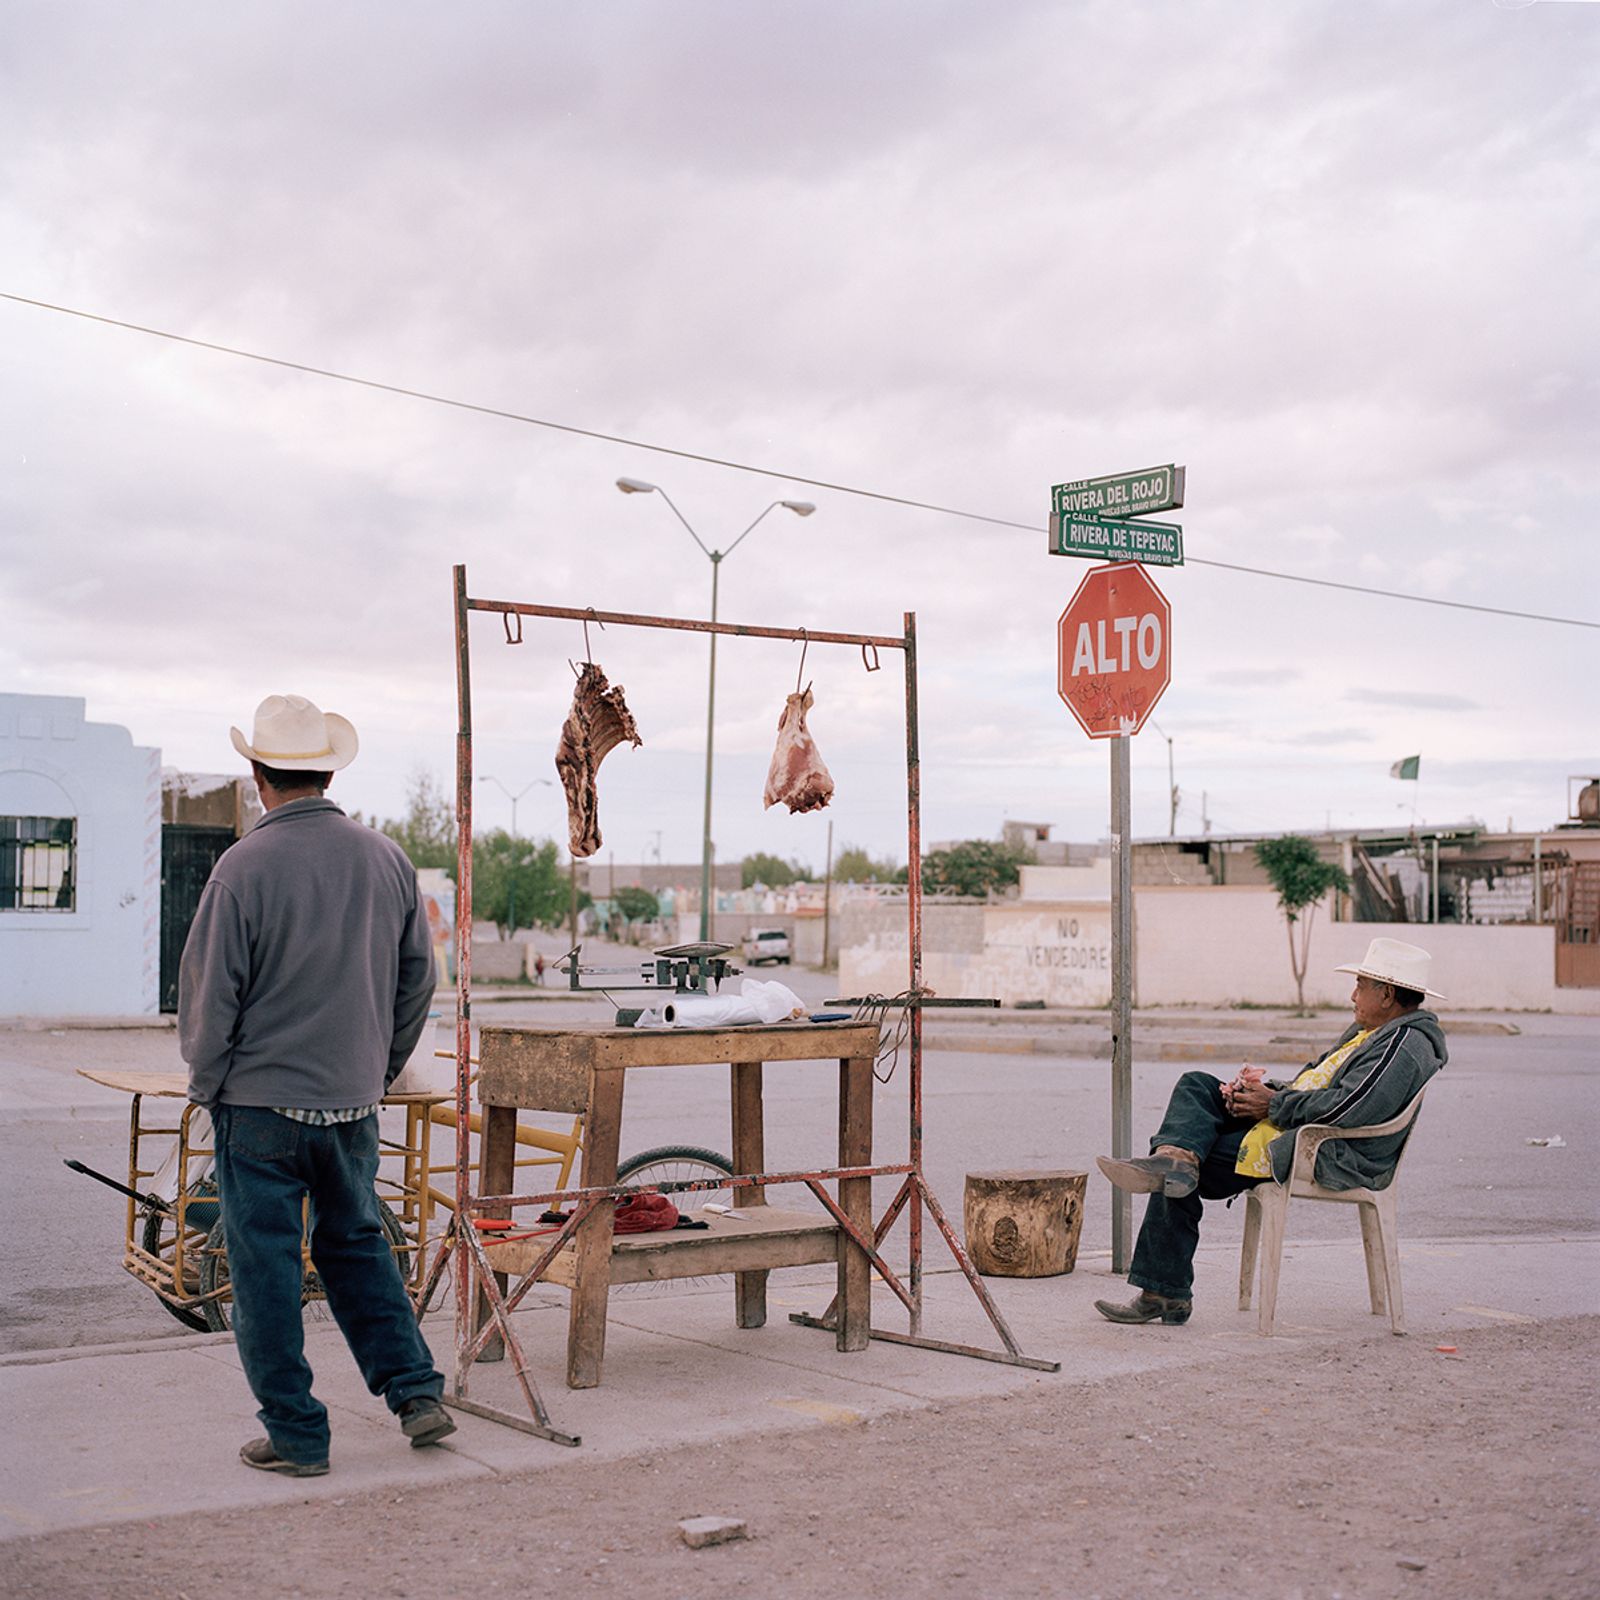 © Jordi Ruiz Cirera - Image from the Frontera norte photography project